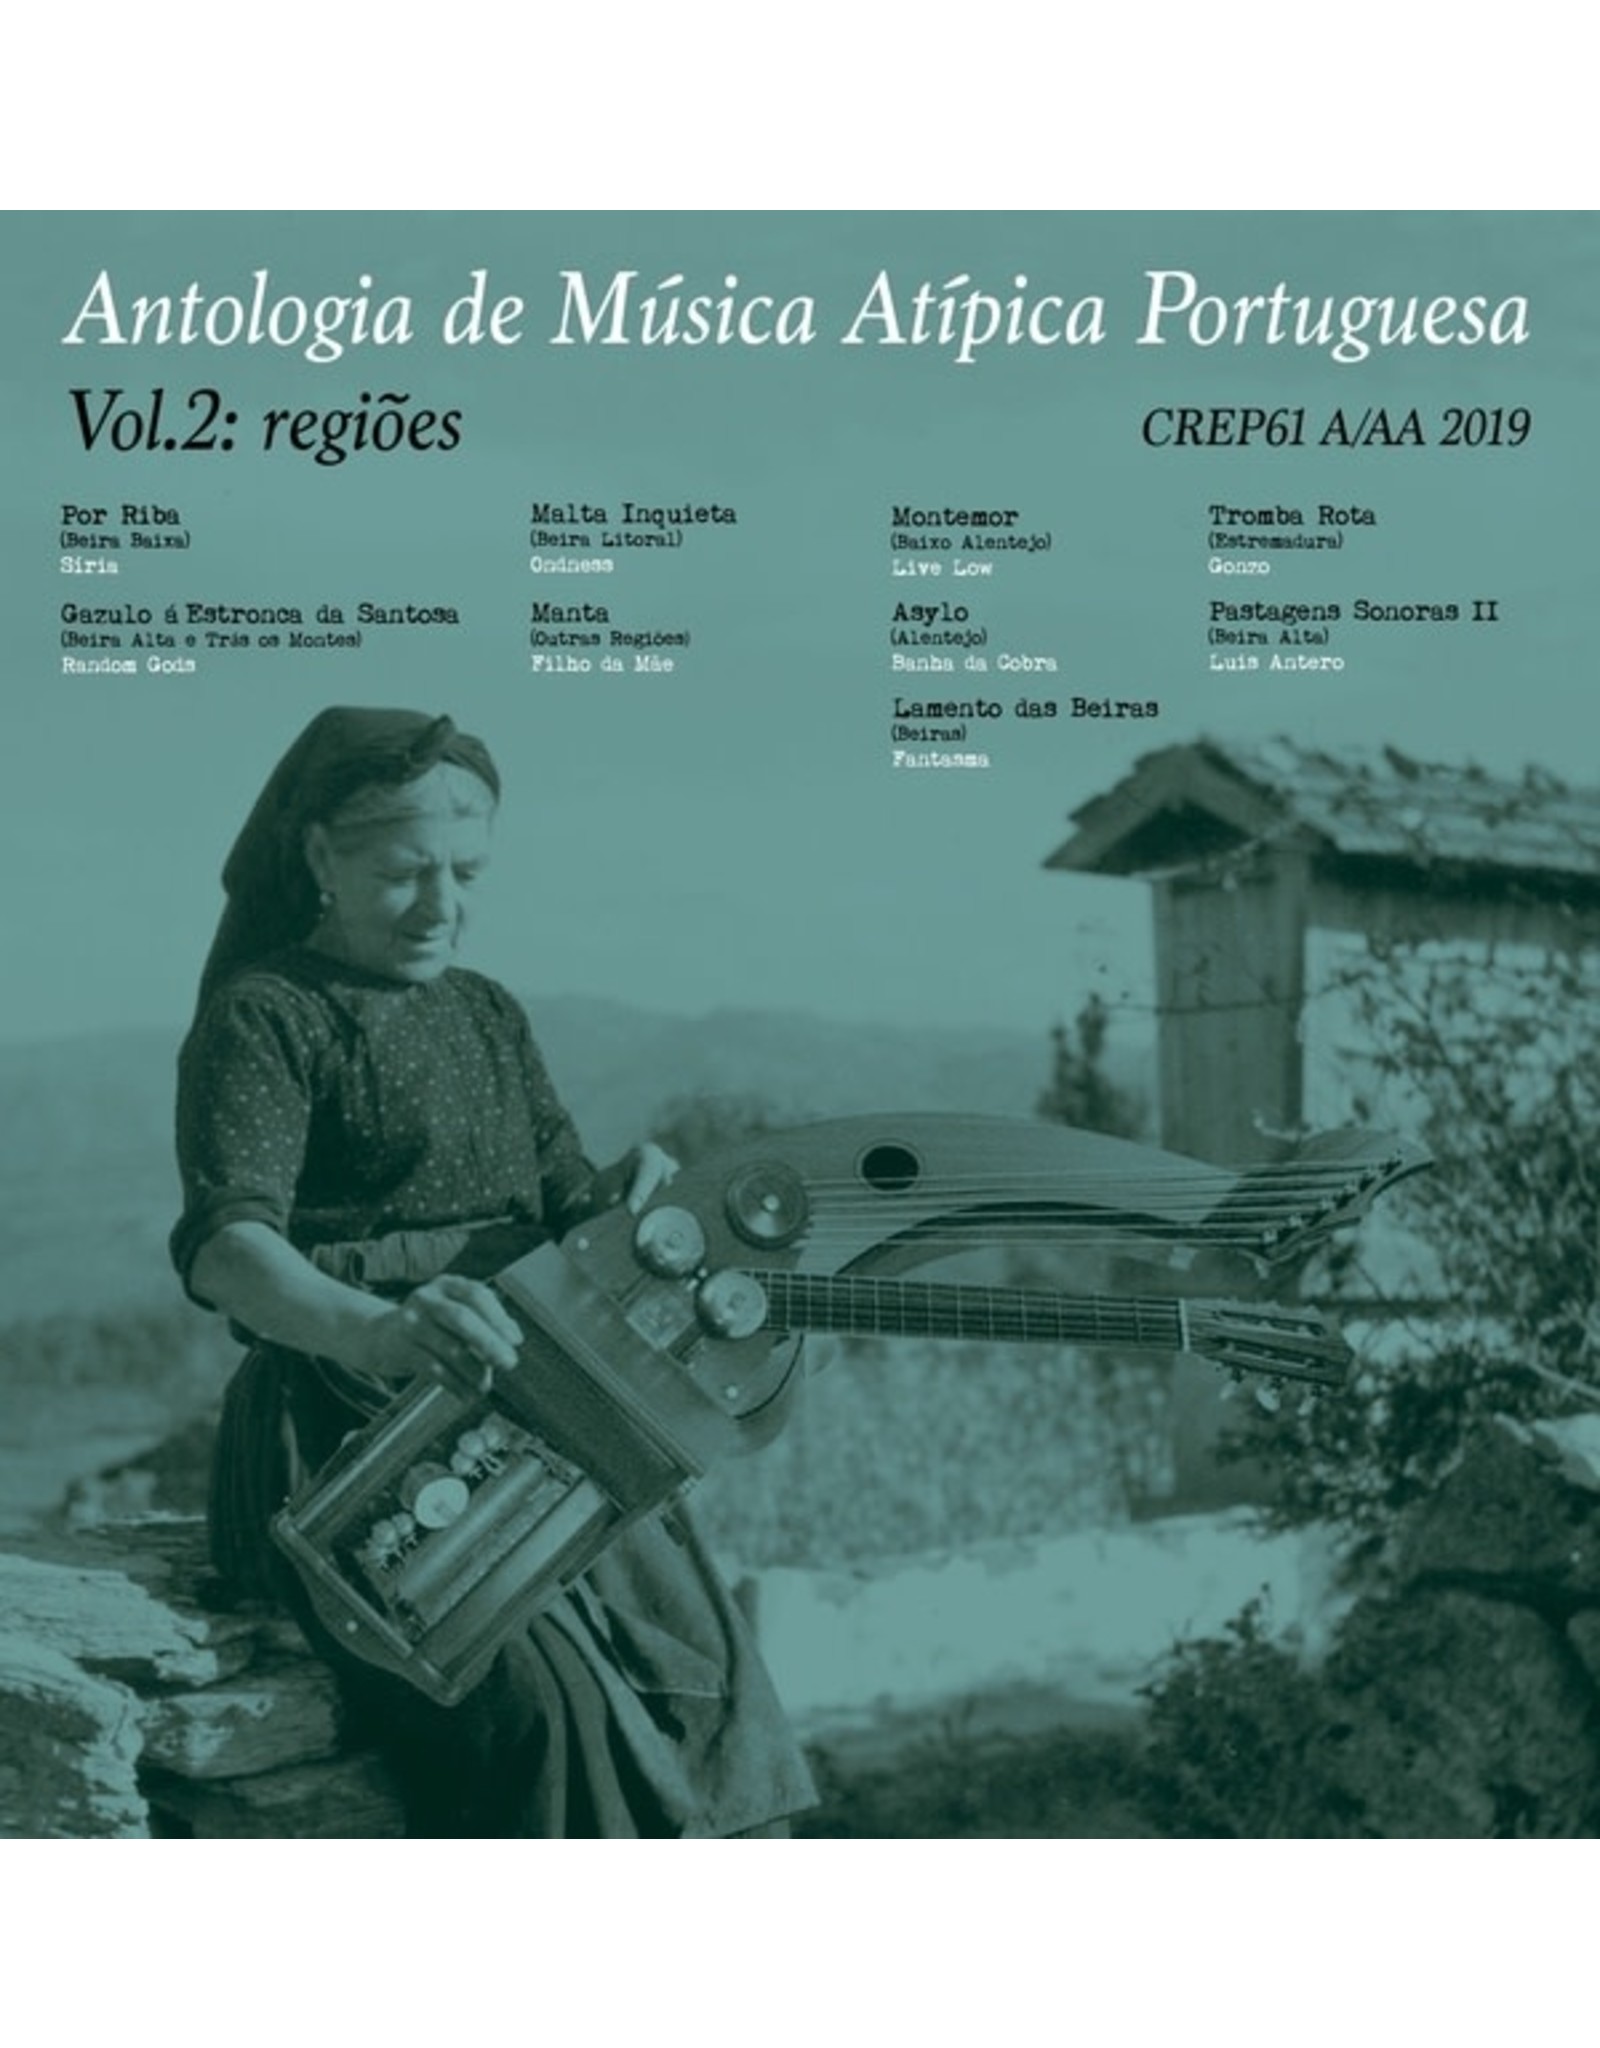 Discrepant Various: Antologia de Musica V2 LP